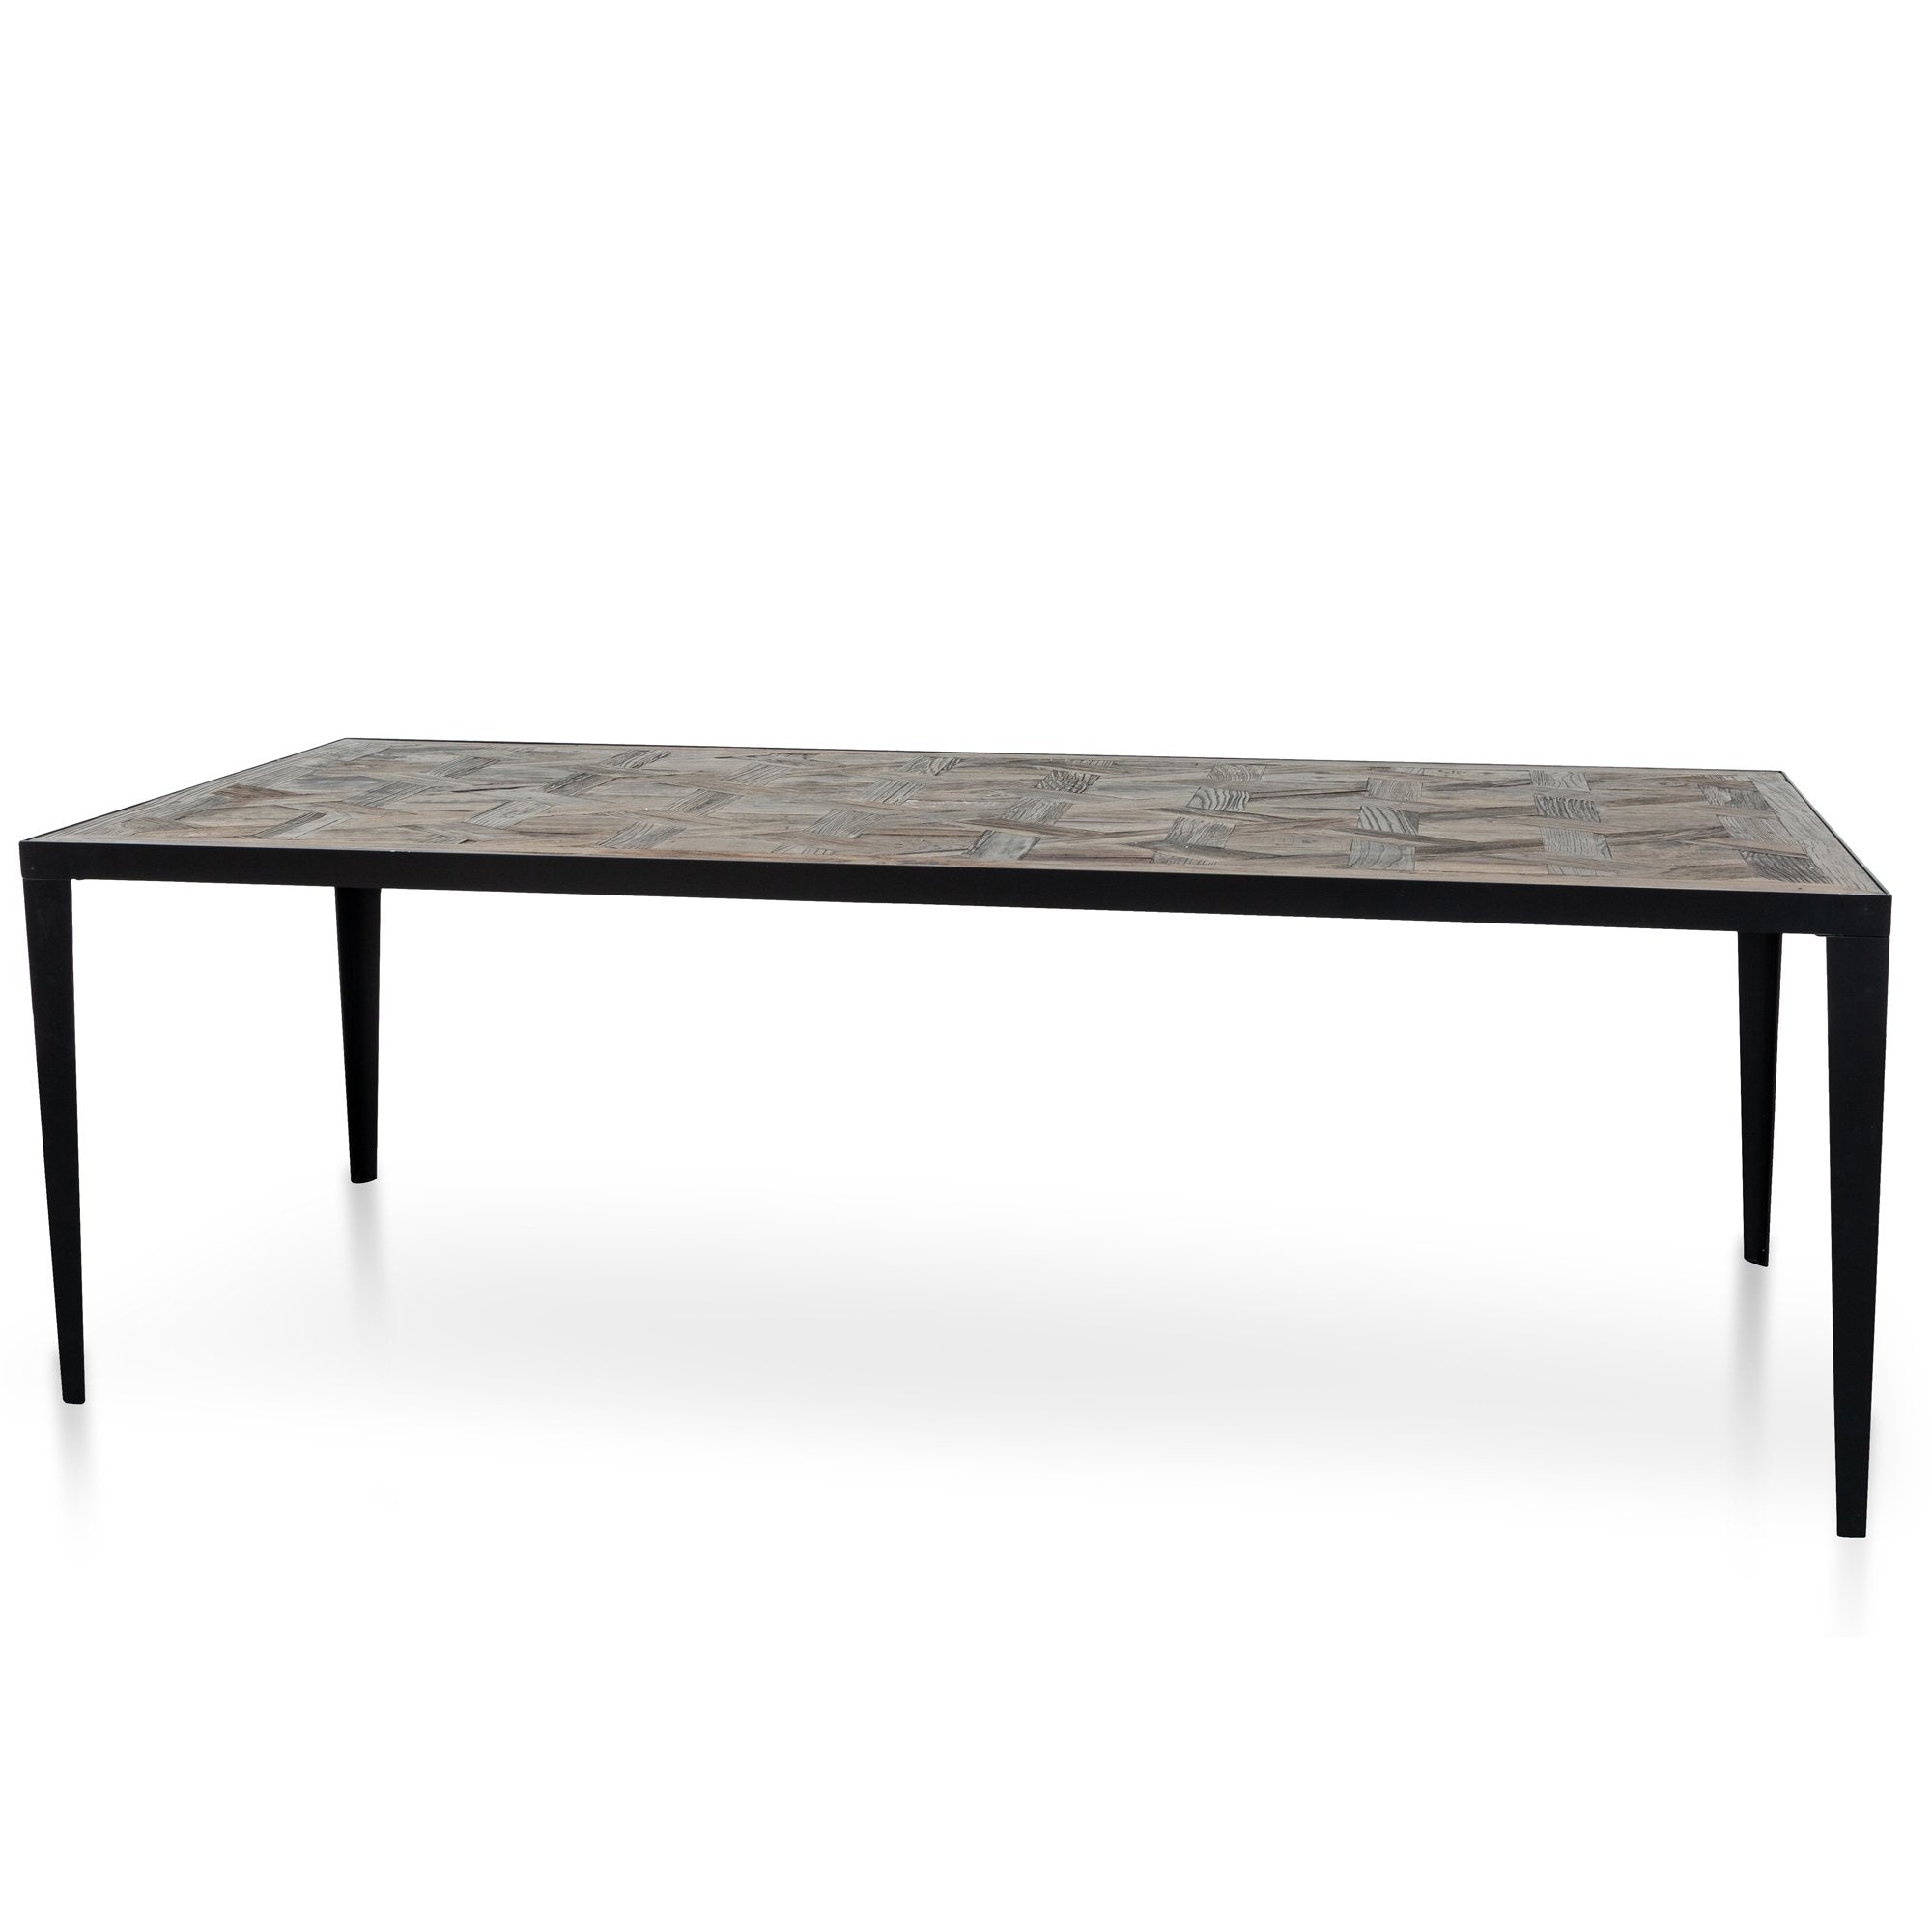 Zaydan Wooden Dining Table - Dark Natural - Dining Tables